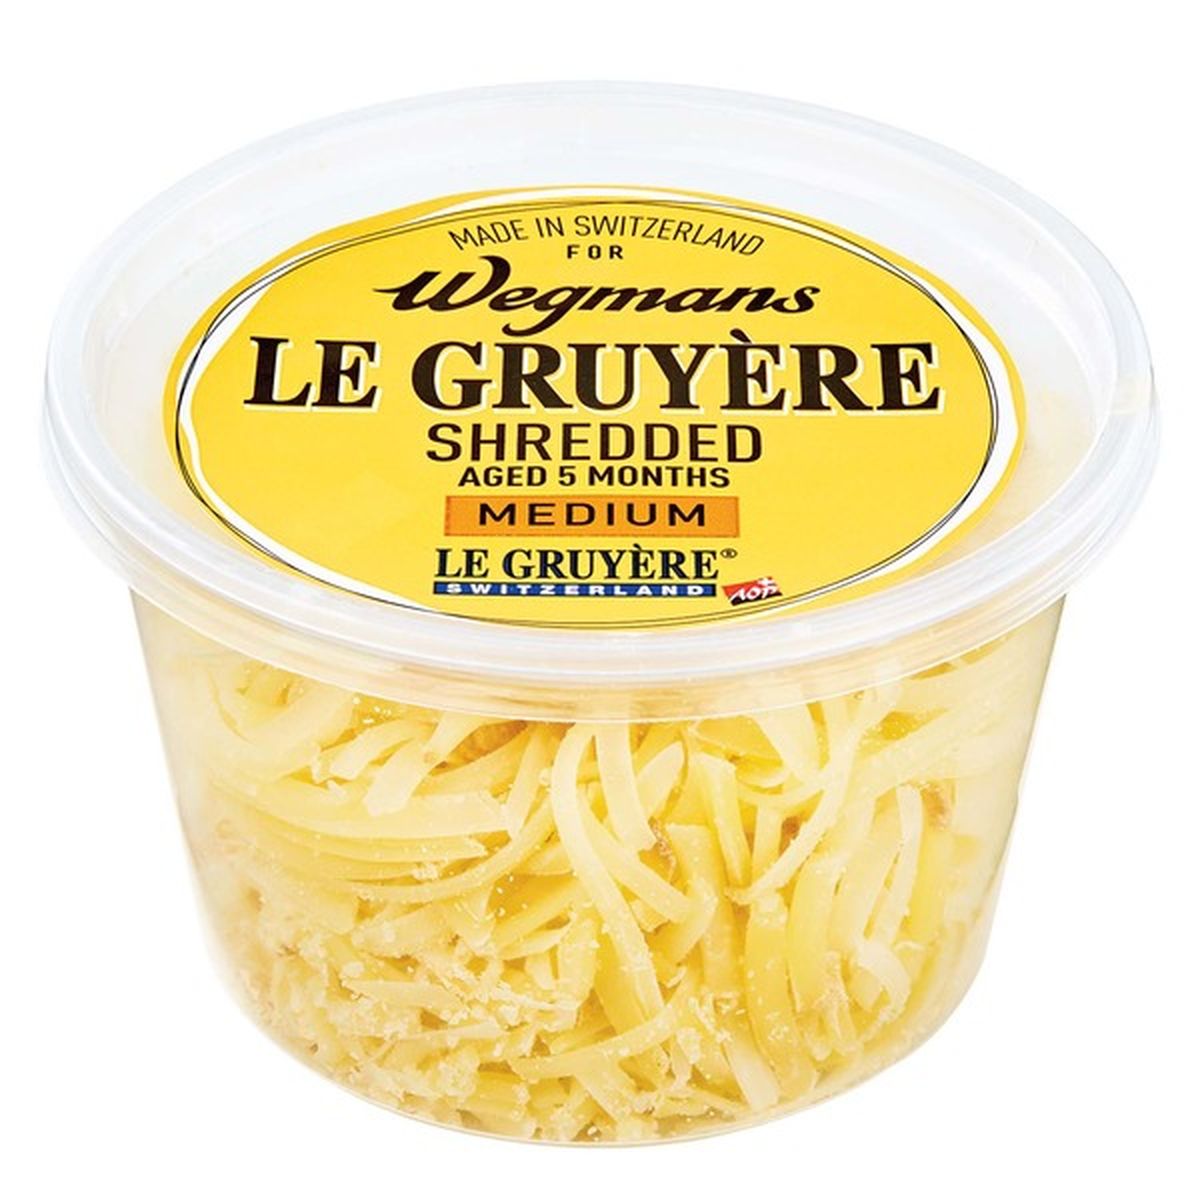 Calories in Wegmans Le Gruyere Cheese Aged 5 Months, Shredded Medium